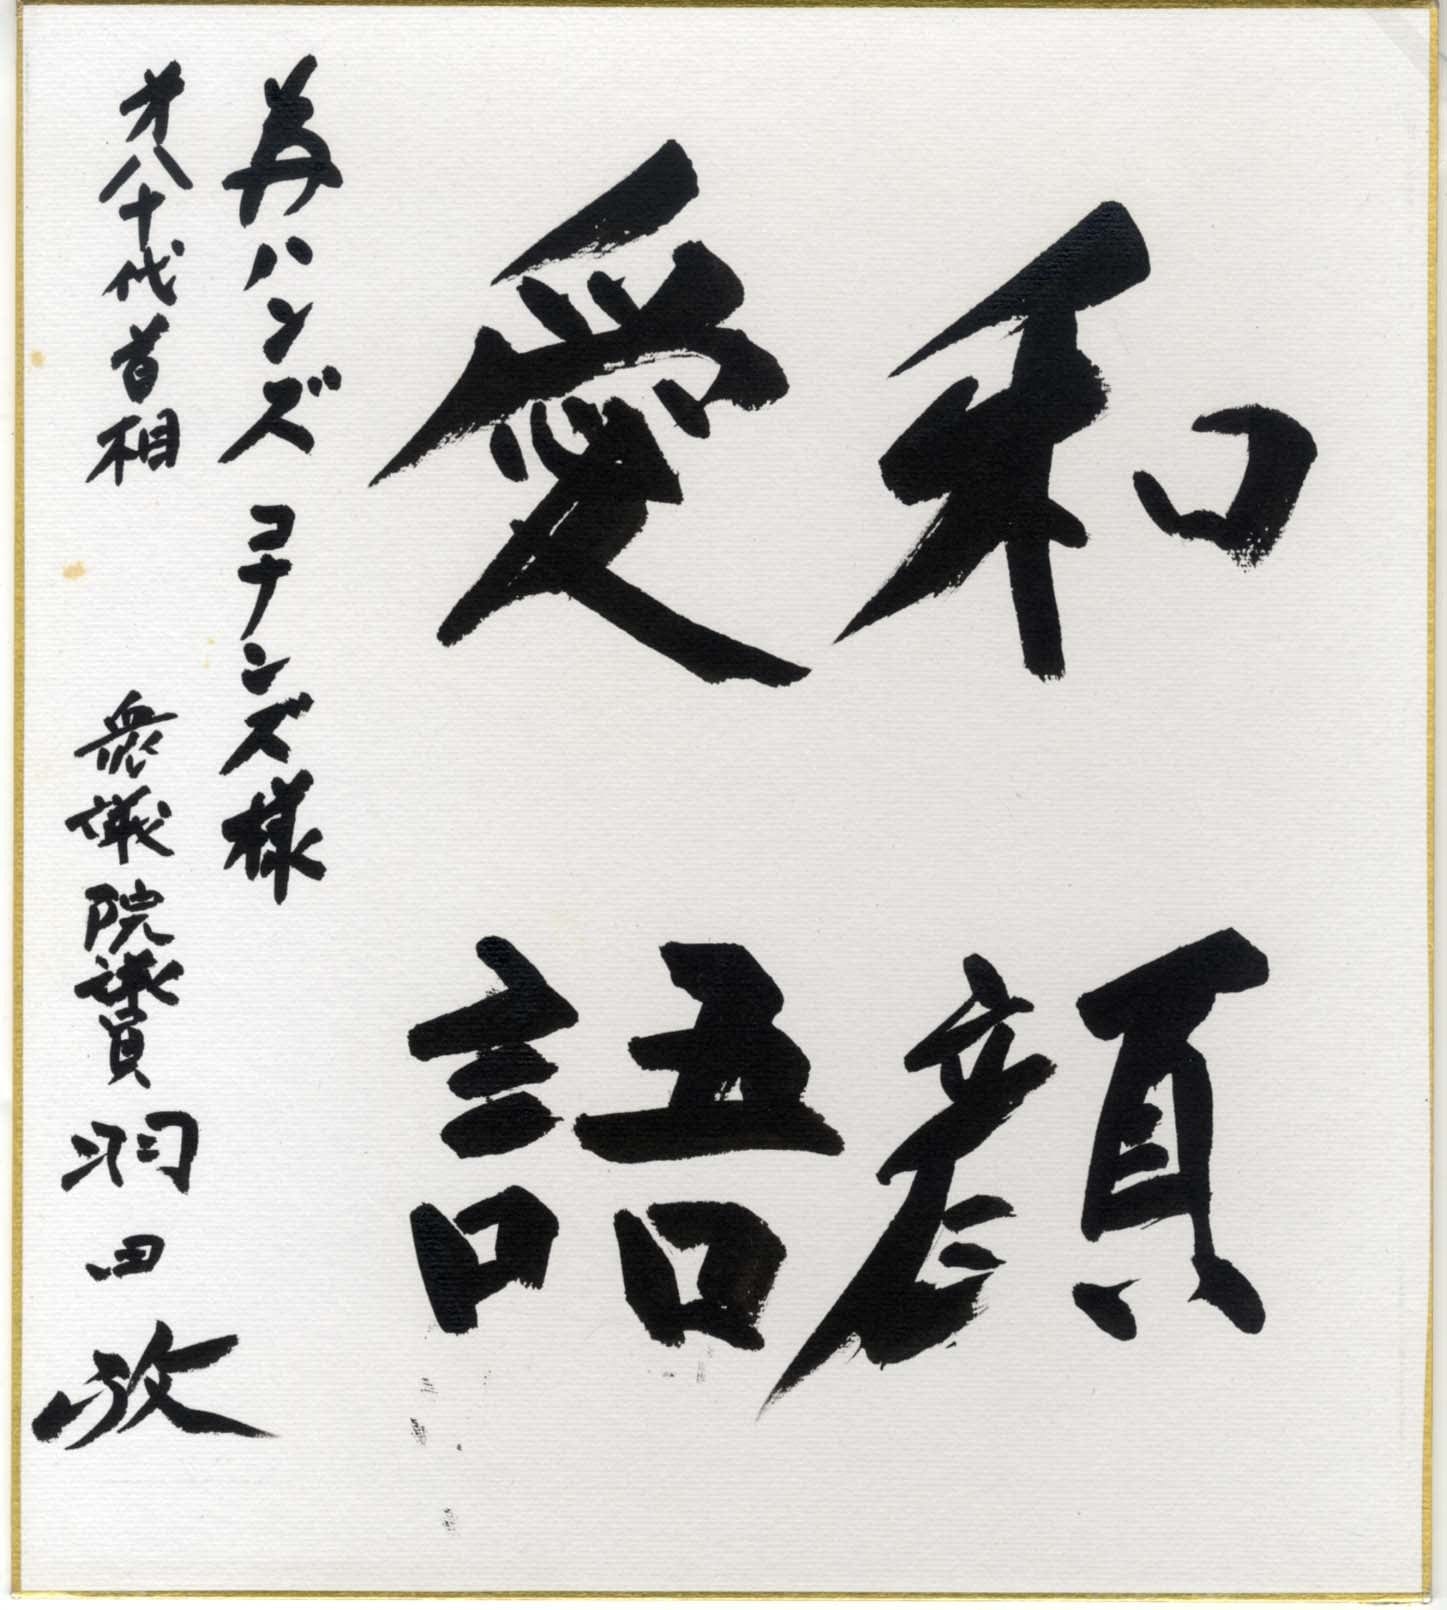 Ying-jeou Ma Autograph Autogramm | ID 8216083562645